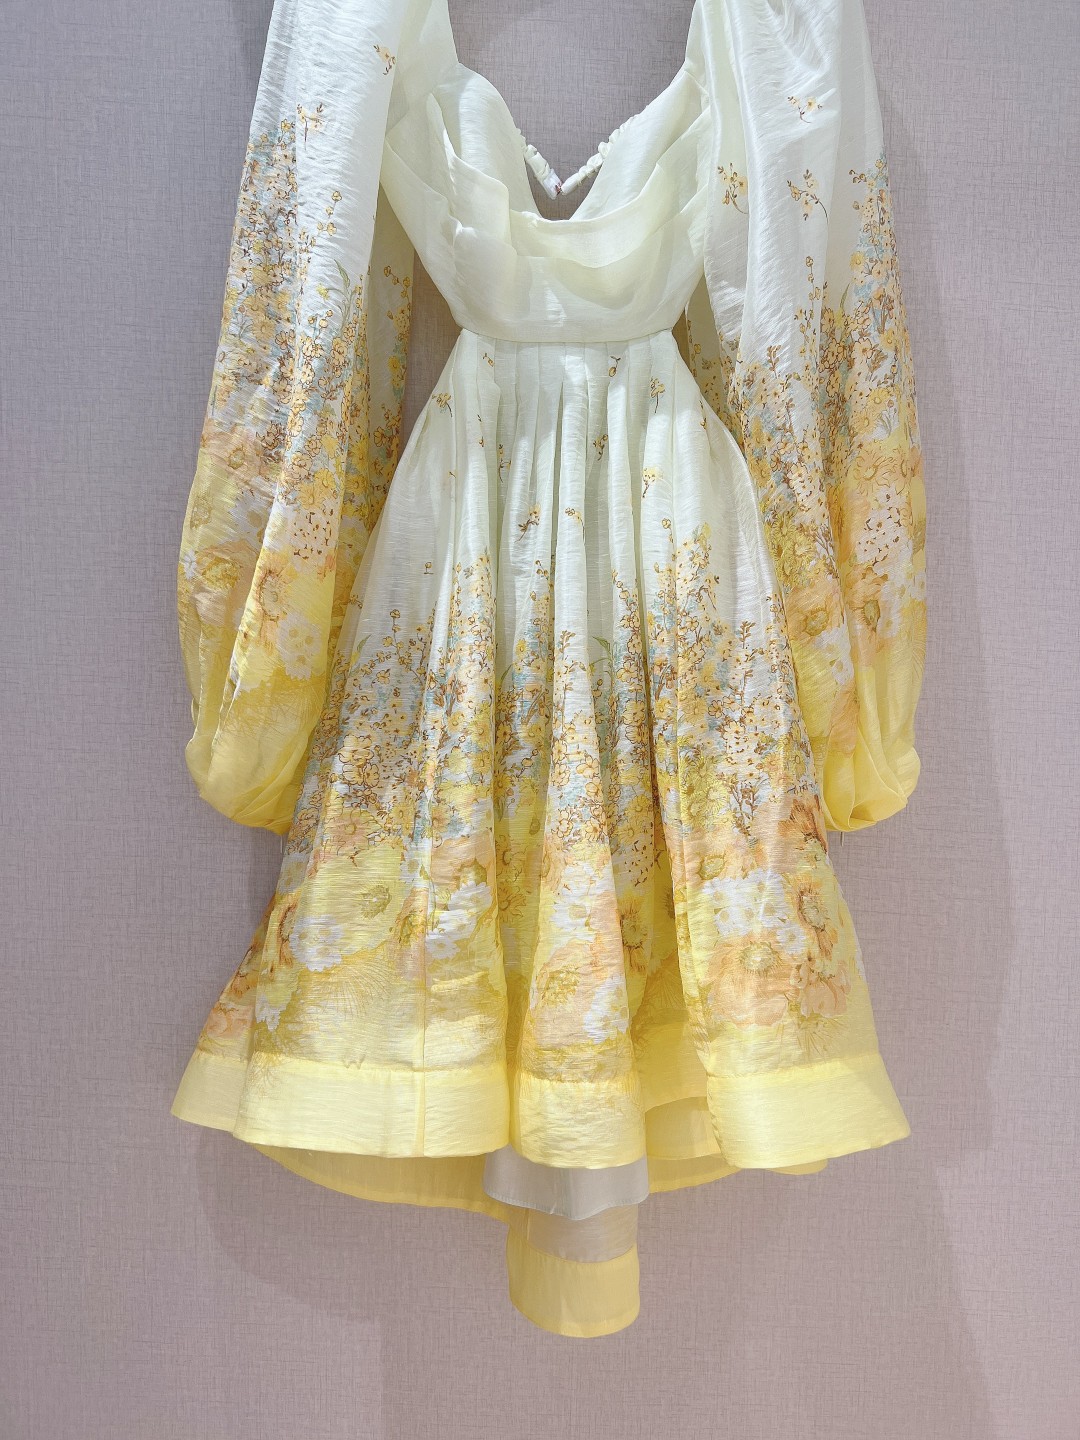 zimmerman*n春夏braletter花卉丝麻迷你裙采用浅色亚麻和丝绸混纺面料制成饰有生动的渐变花